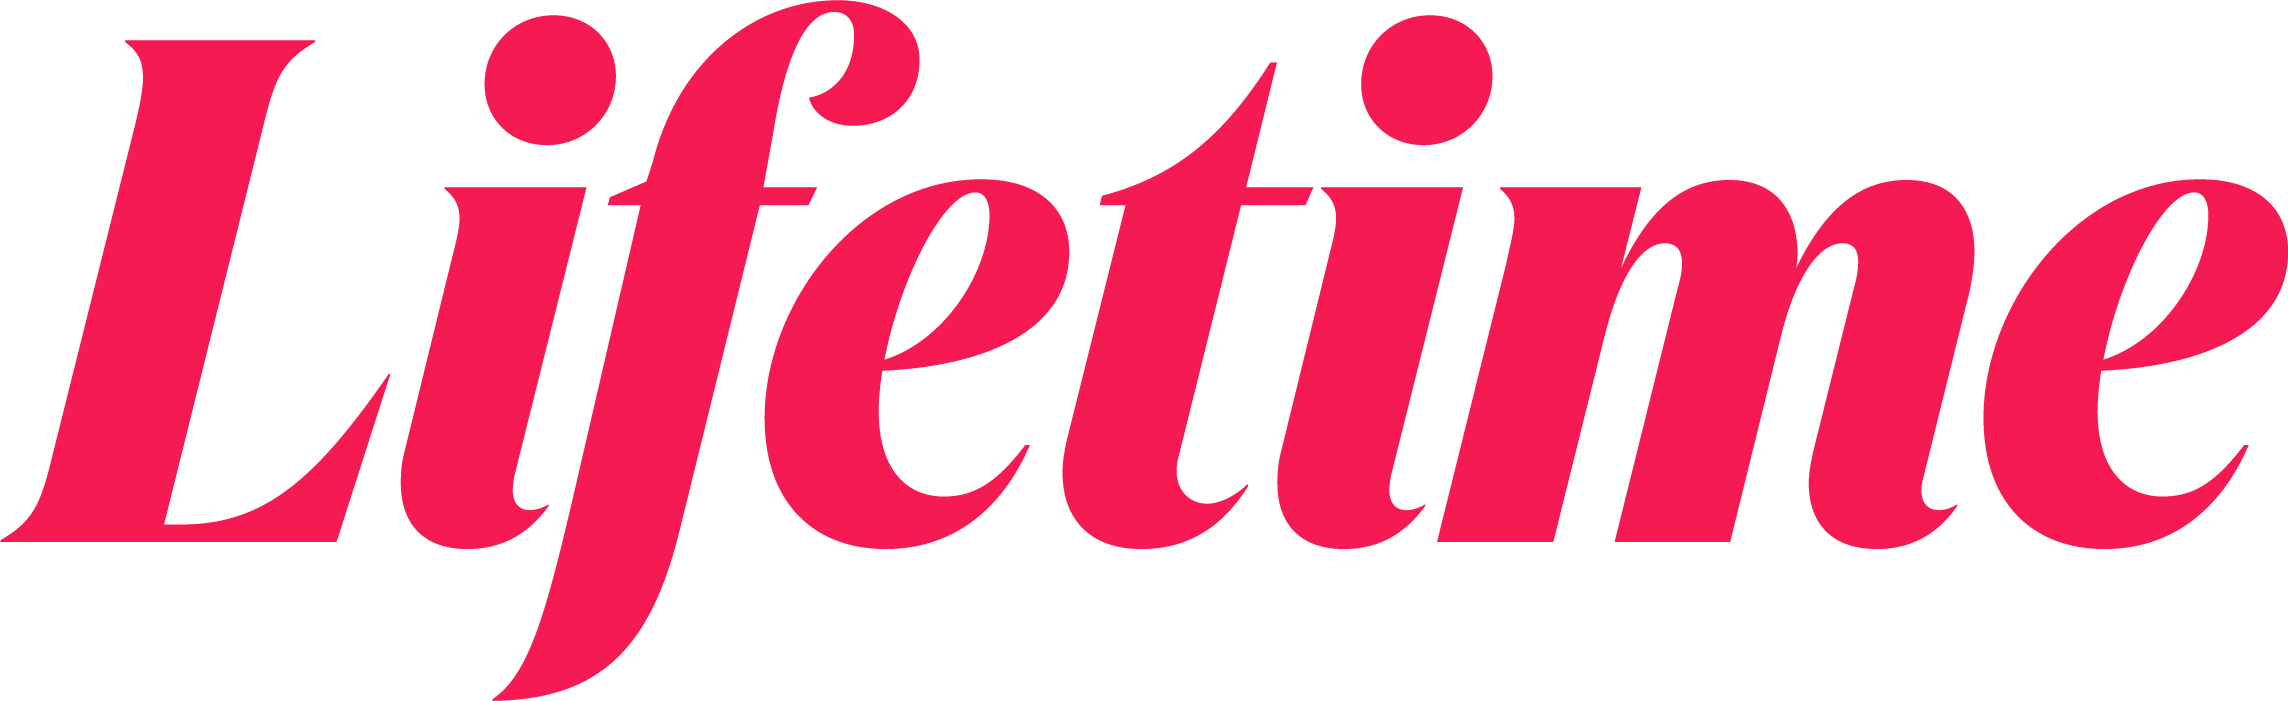 Channel logo for Lifetime